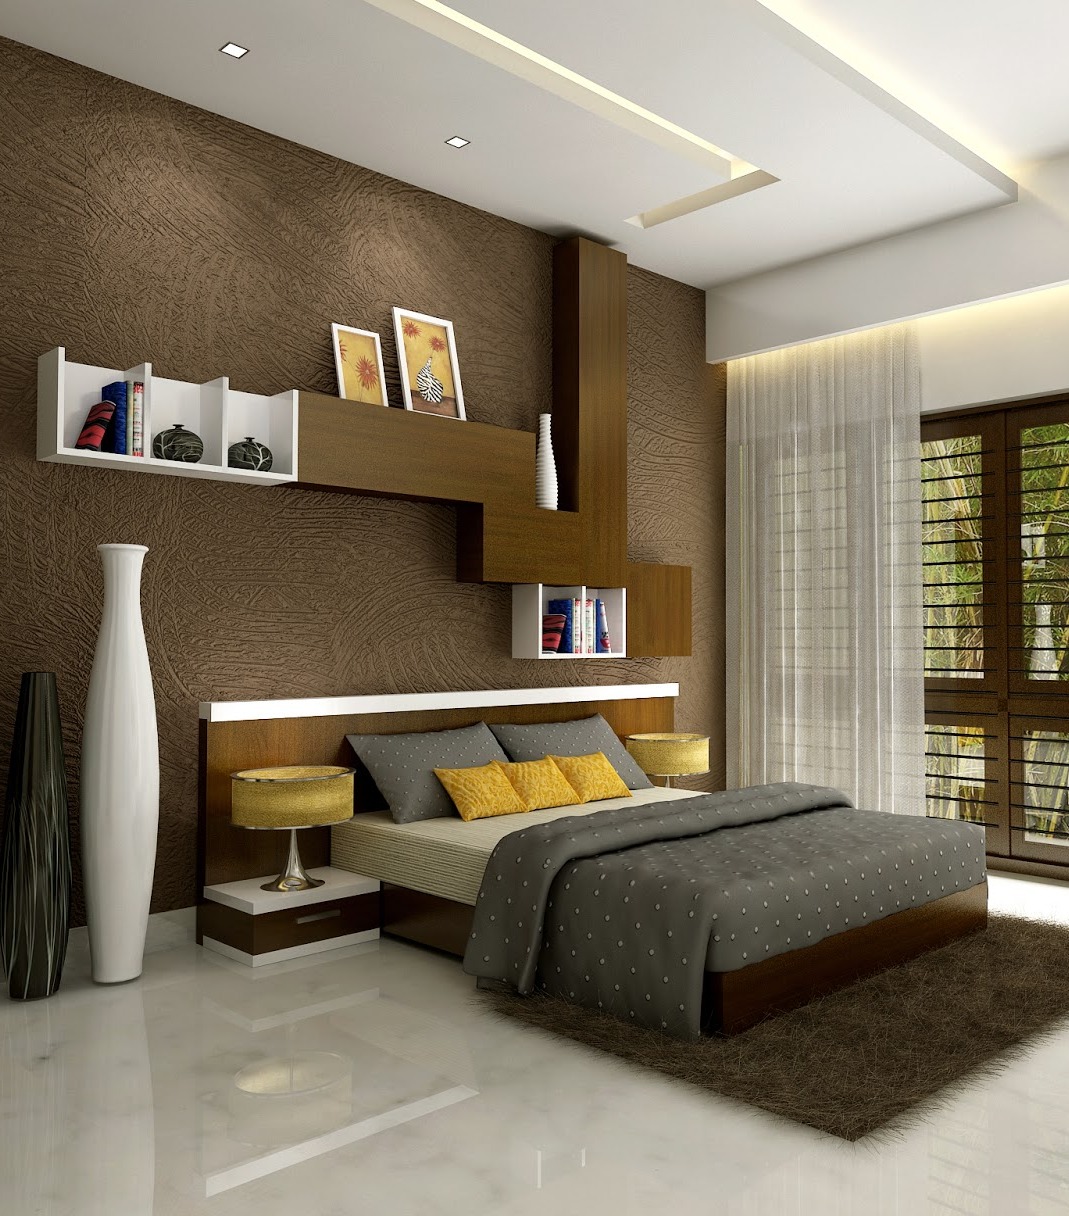 25 Wooden Master Bedroom Design Ideas